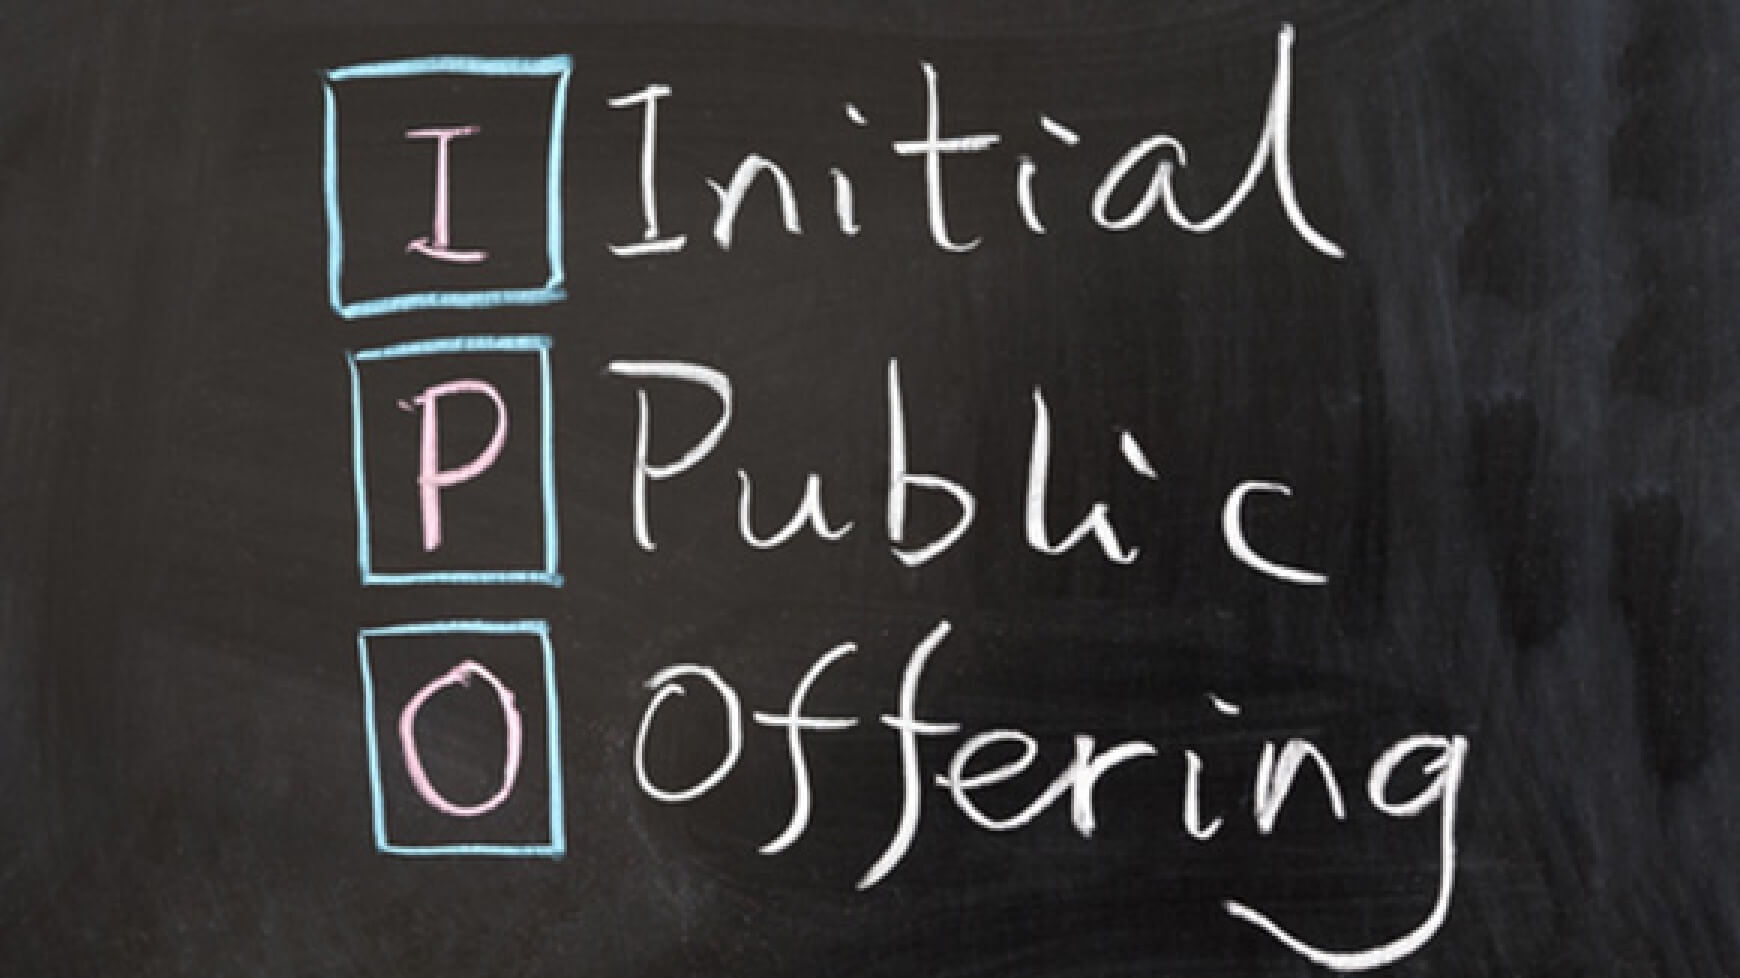 Public offer. Public offering. Public initial public offering. IPO.